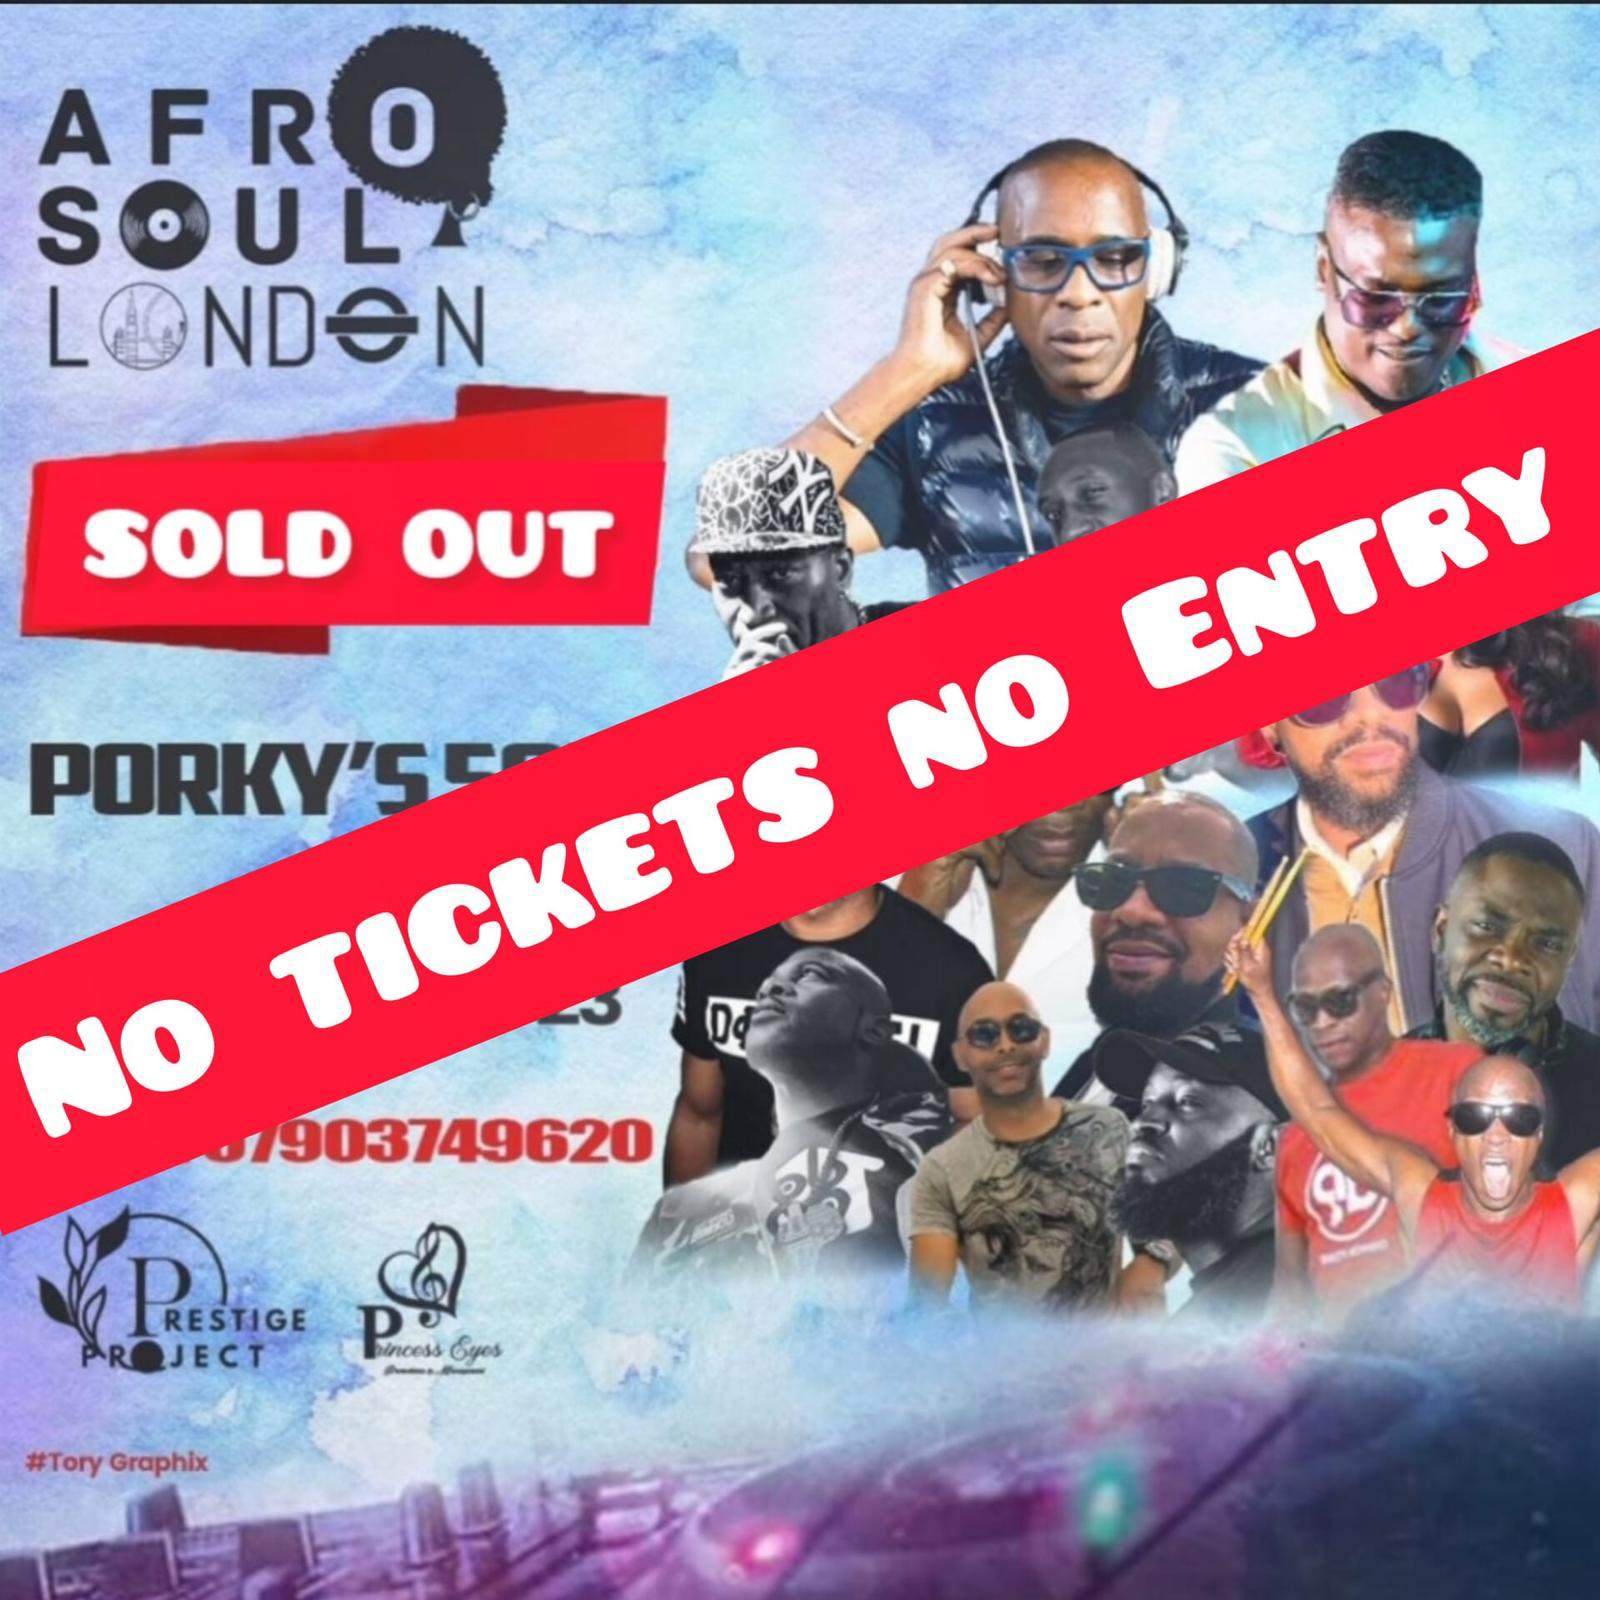 Afro Soul London HOST PORKY's B'DAY PARTY SOLD OUT NO TICKET NO ENTRY - Página trasera